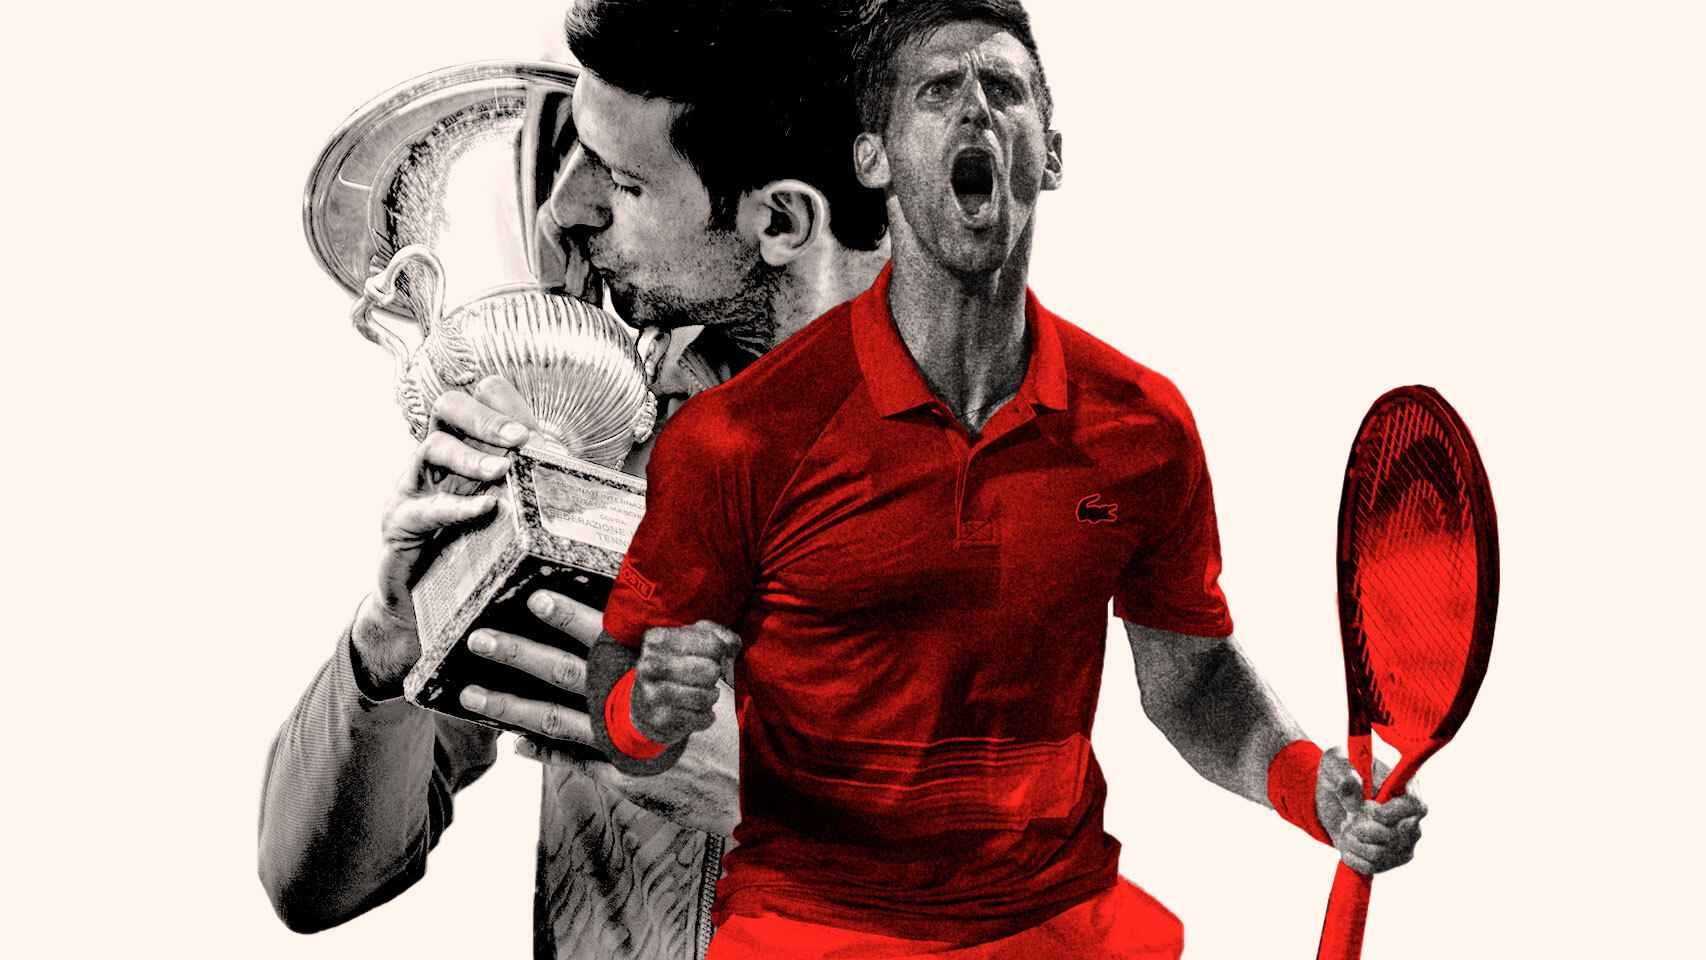 Novak Djokovic, ganador del Master 1.000 de Roma 2022